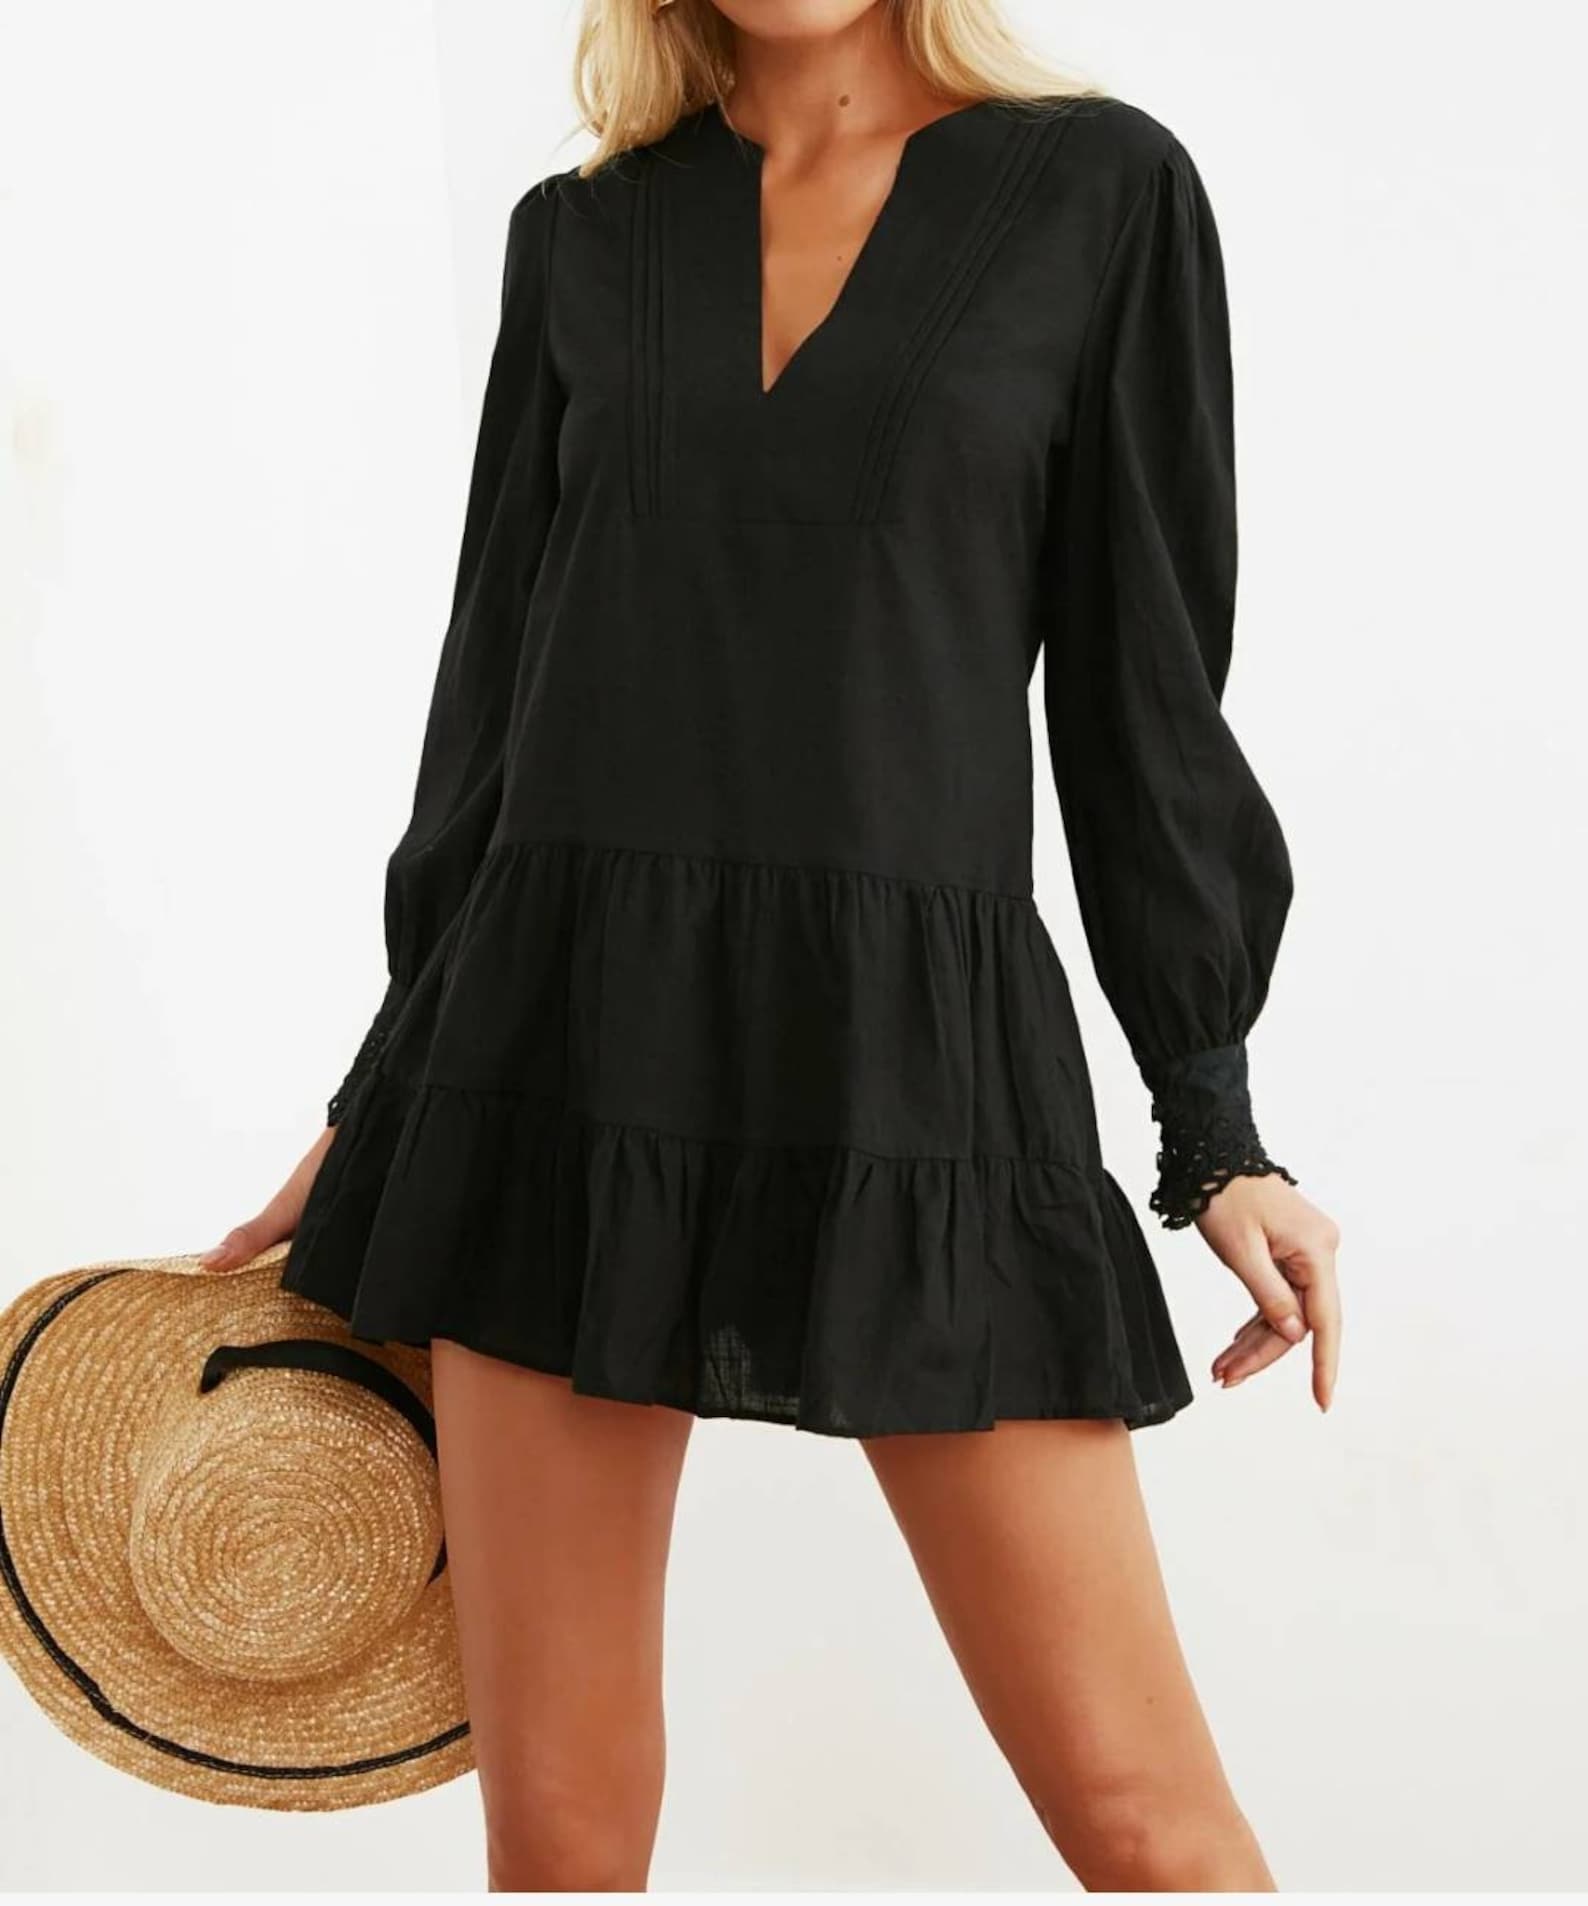 Black Mini Dress With Sleevesblack Cotton Dressboho - Etsy